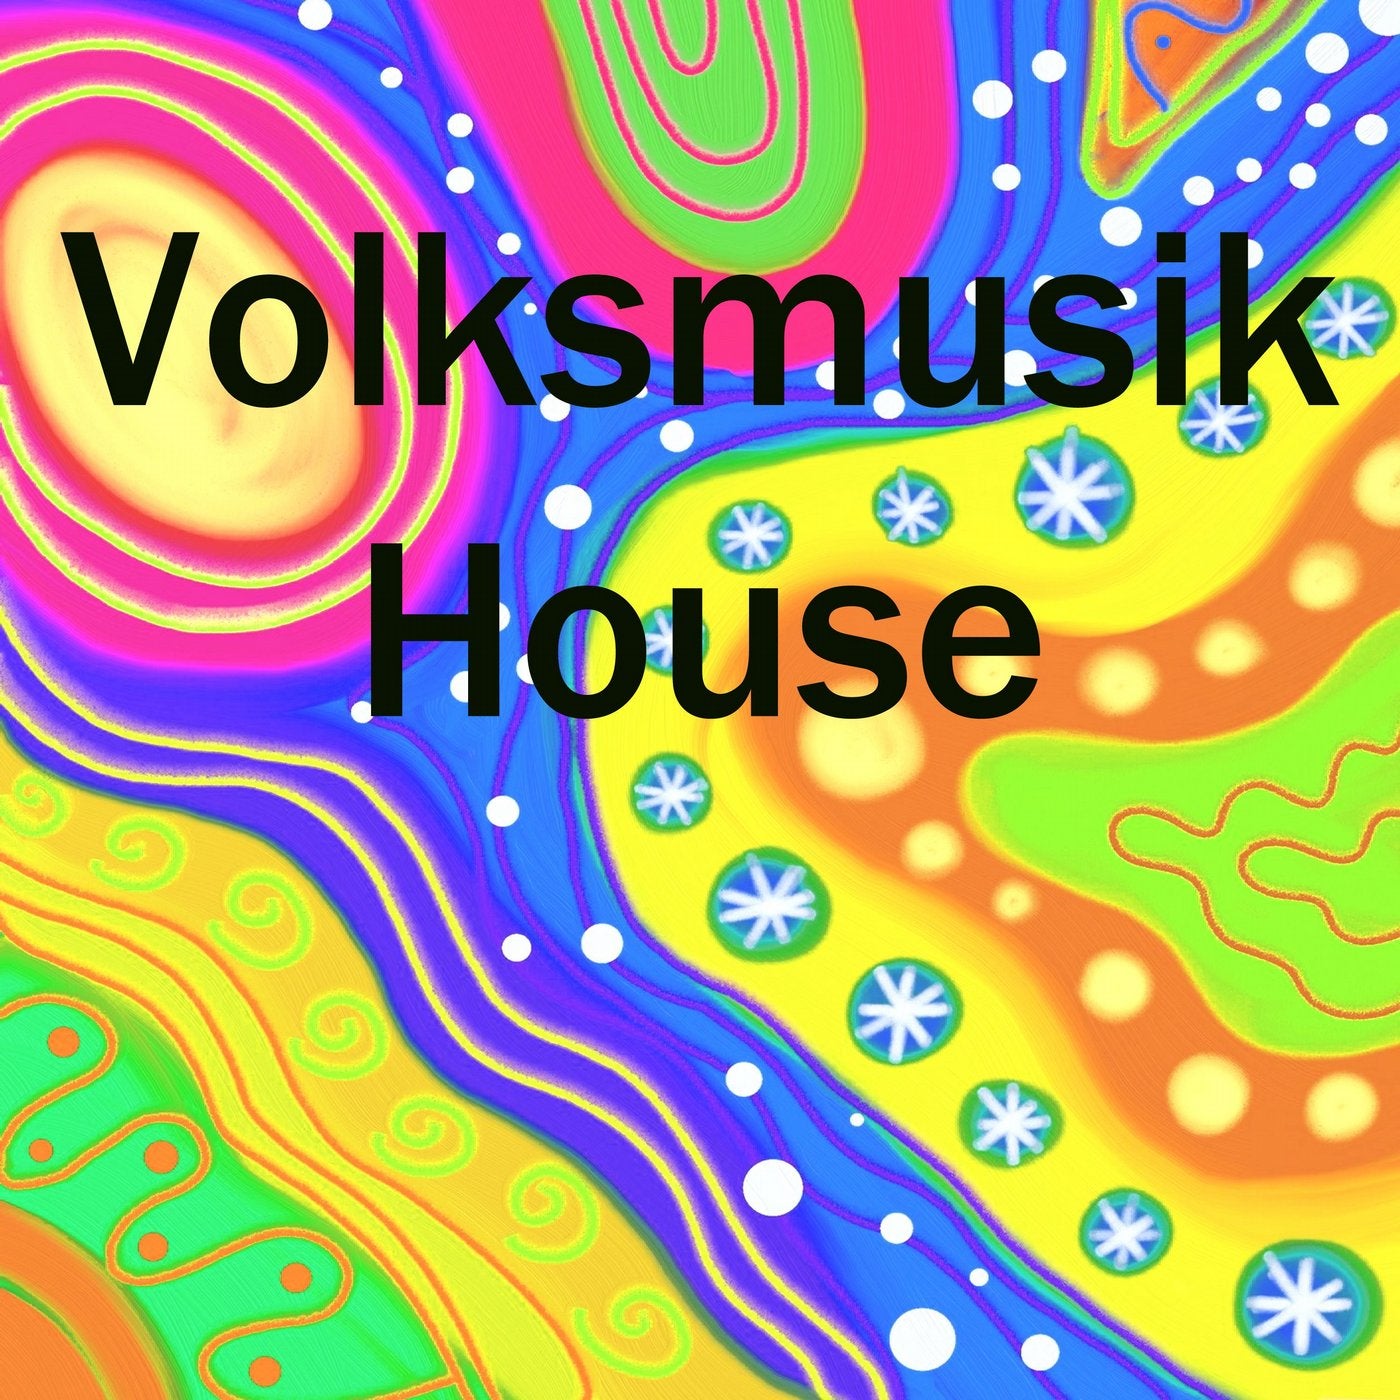 Volksmusik House